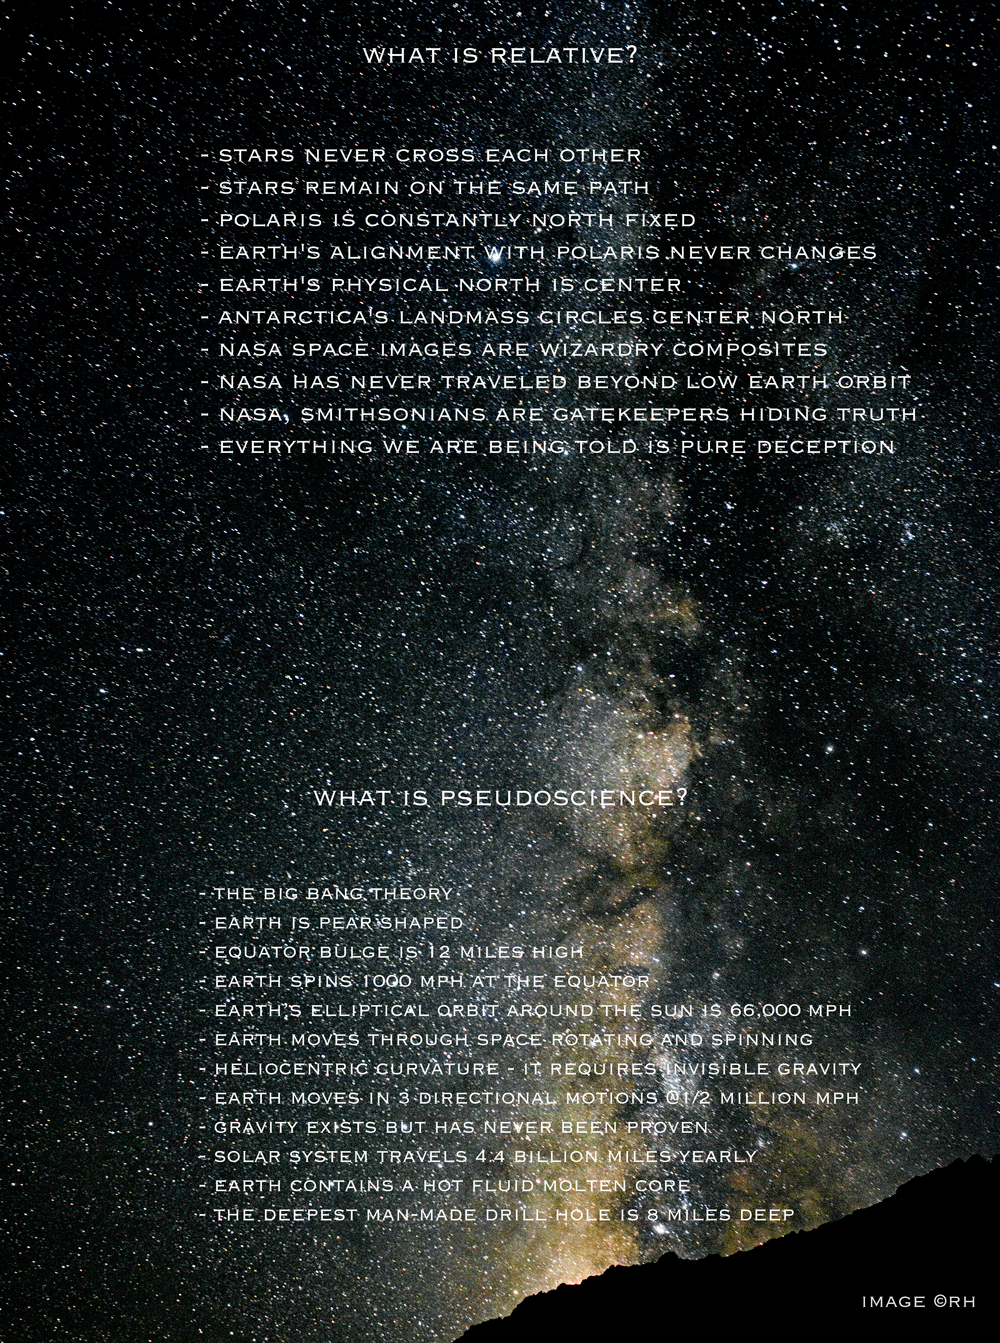 astro night sky DSLR FX image by Rick Hemi